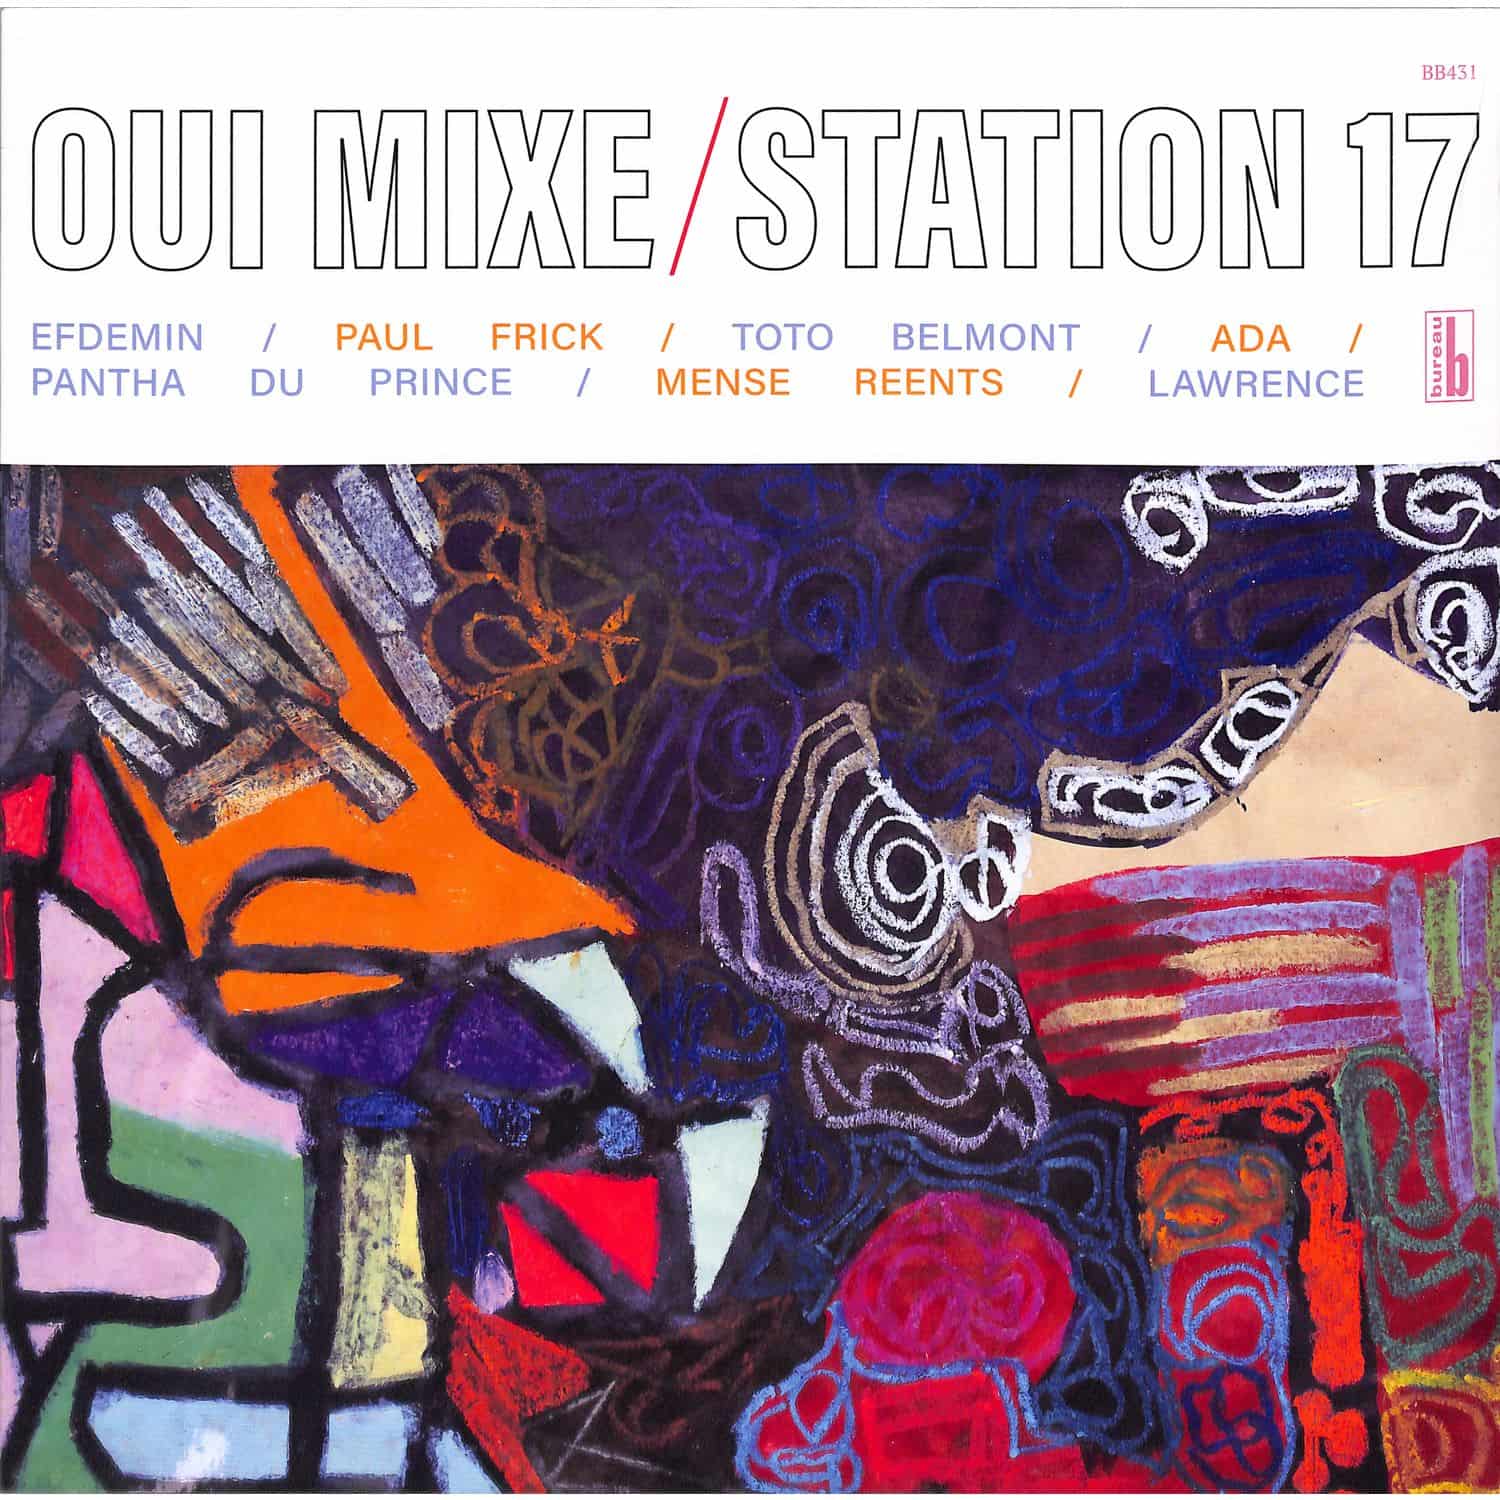 Station 17 - OUI MIXE 